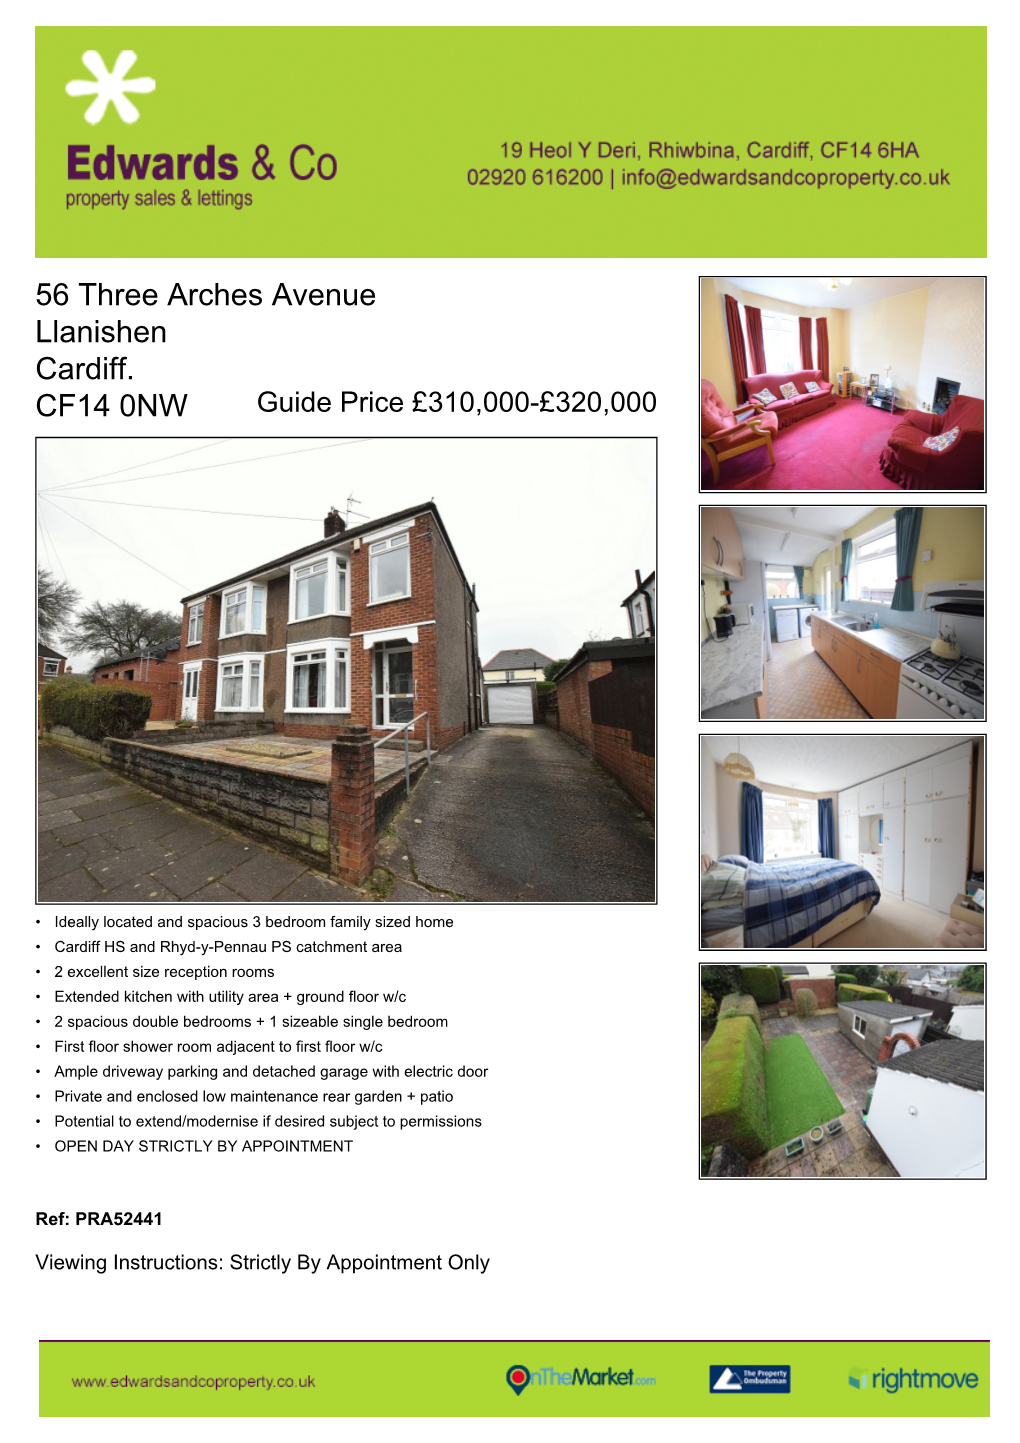 56 Three Arches Avenue Llanishen Cardiff. CF14 0NW Guide Price £310,000-£320,000